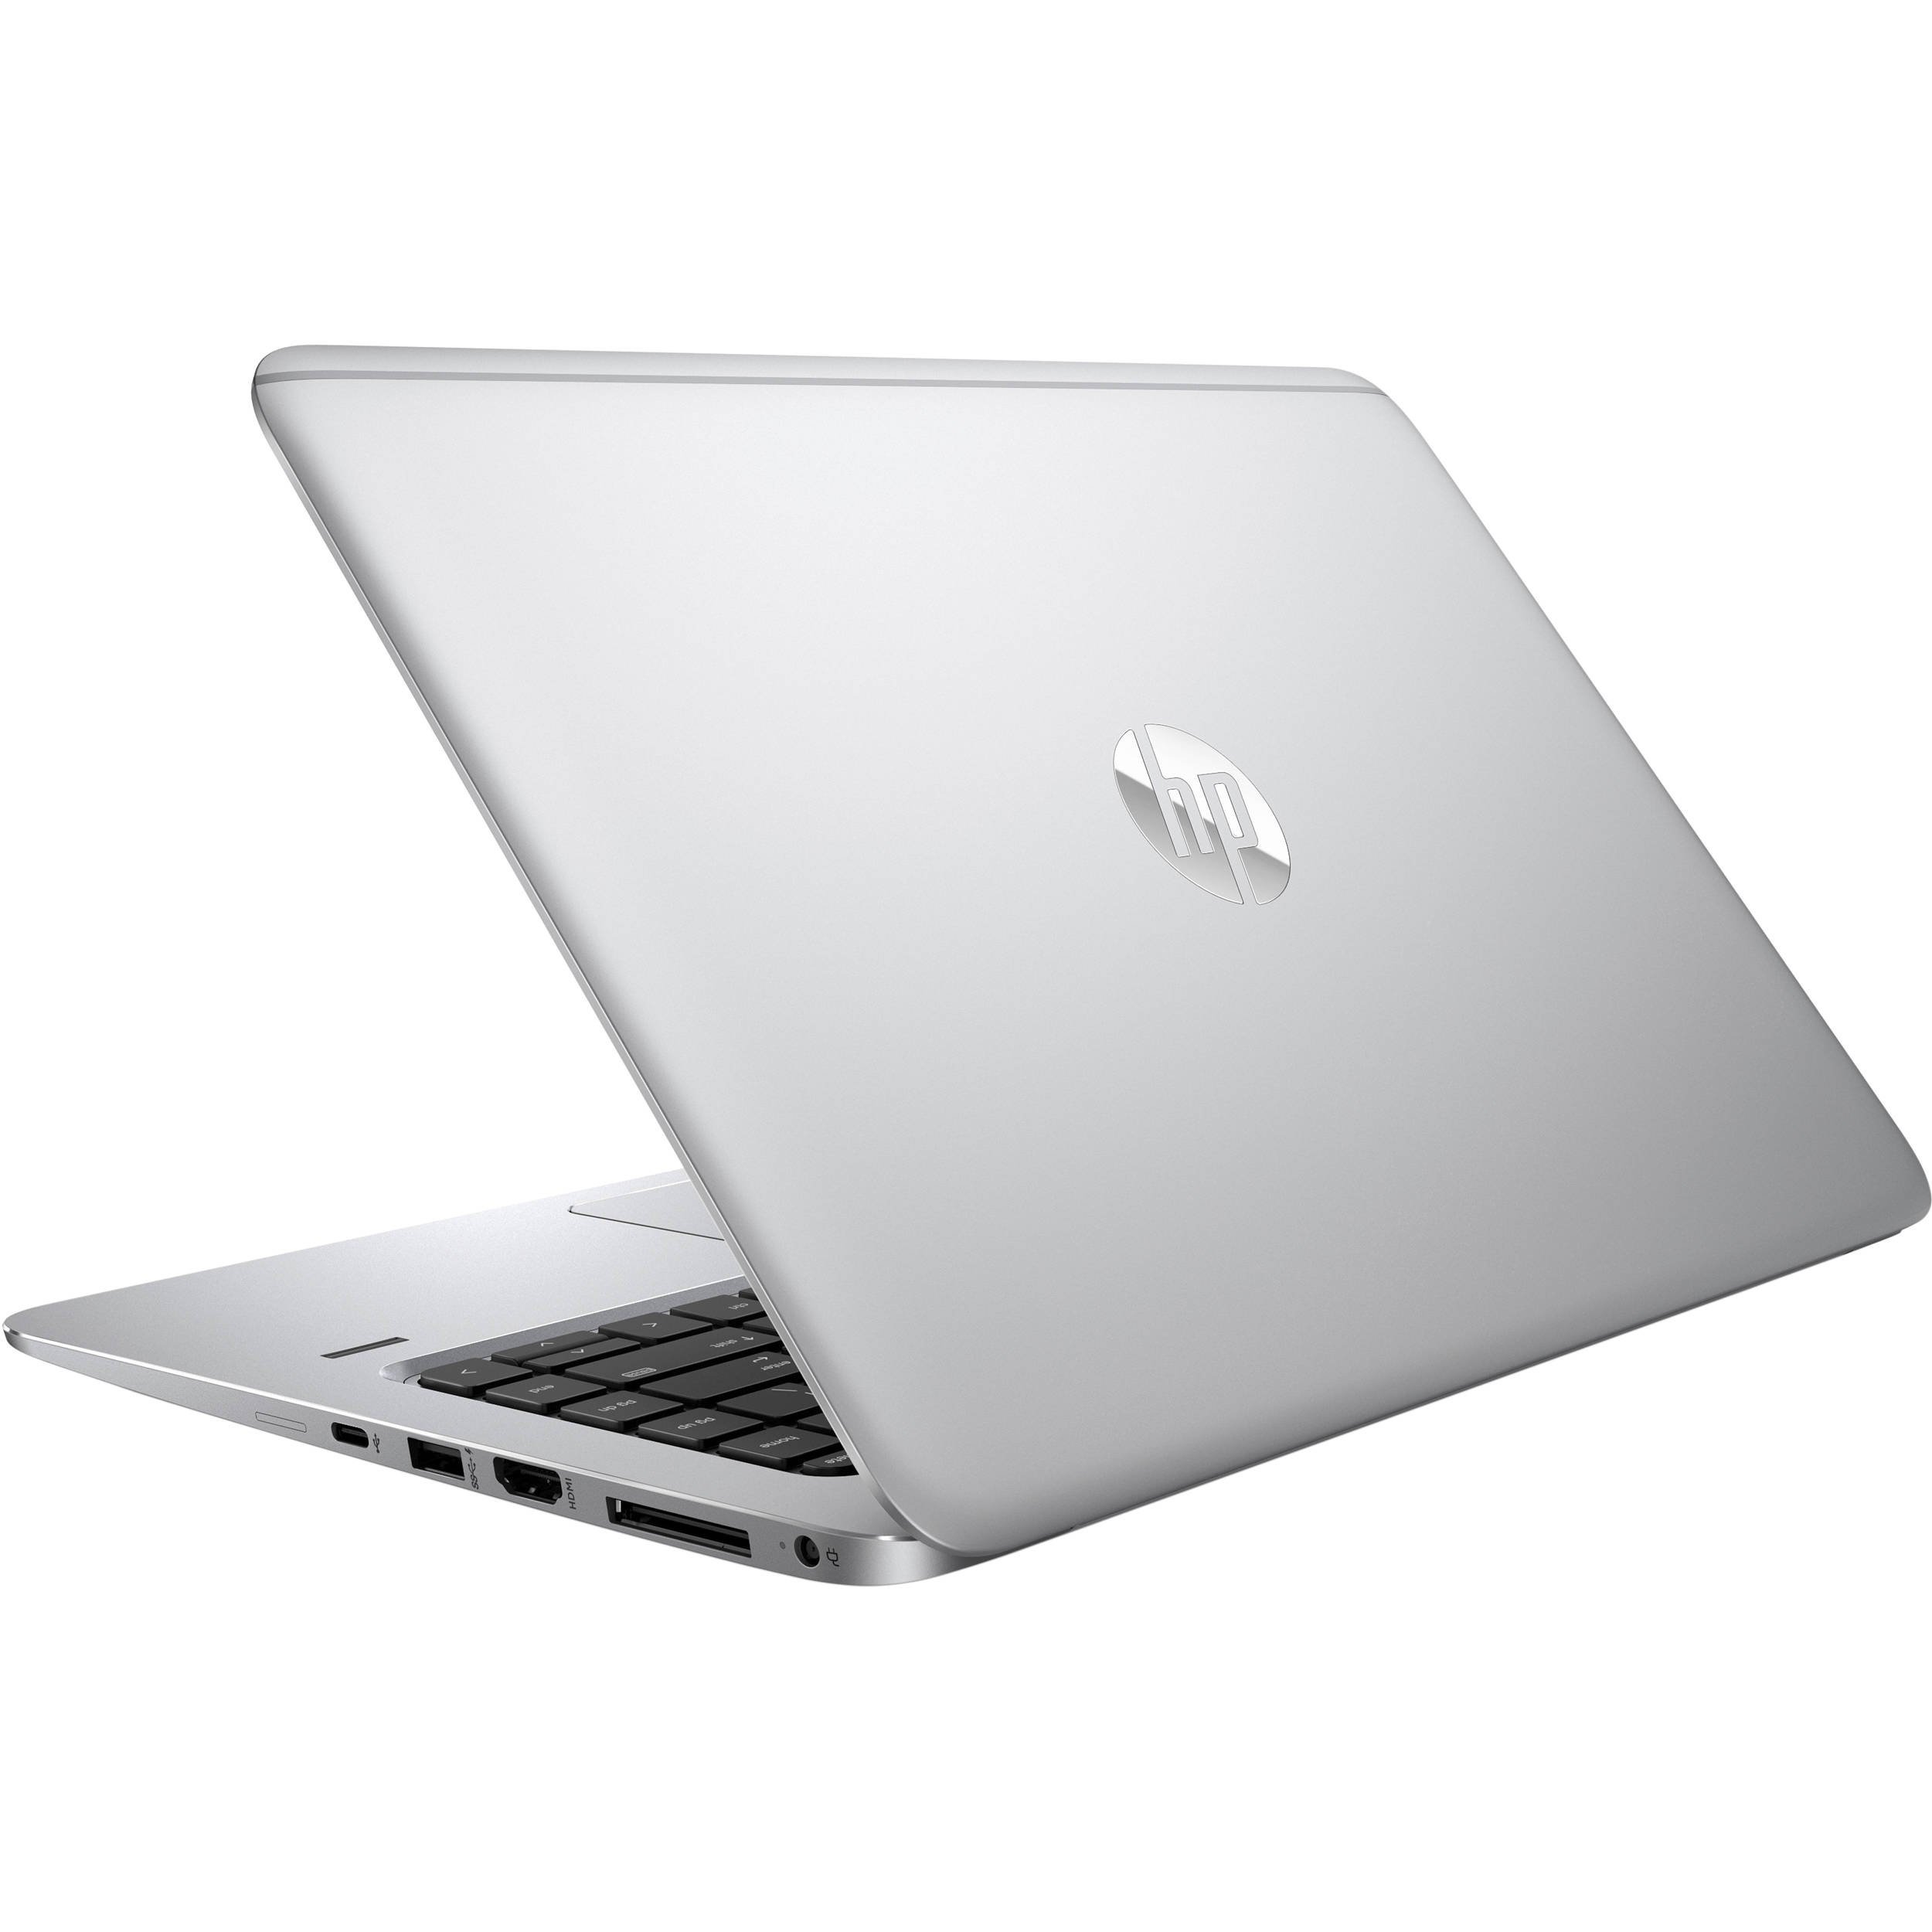  Ноутбук HP EliteBook 1040 G3 (Y8R05EA) фото6